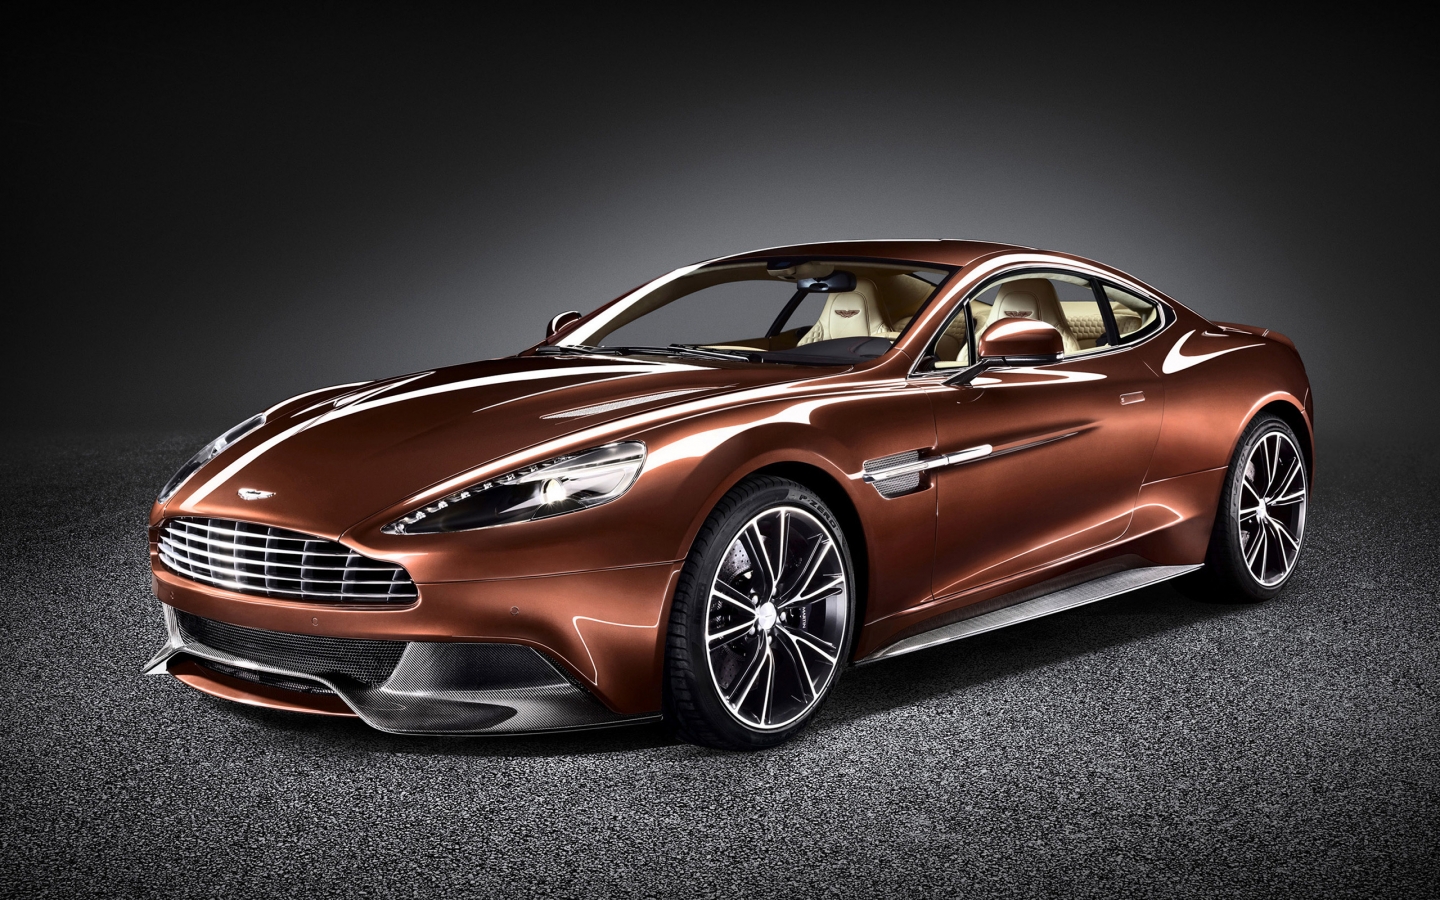 2013 Aston Martin Vanquish Studio for 1440 x 900 widescreen resolution